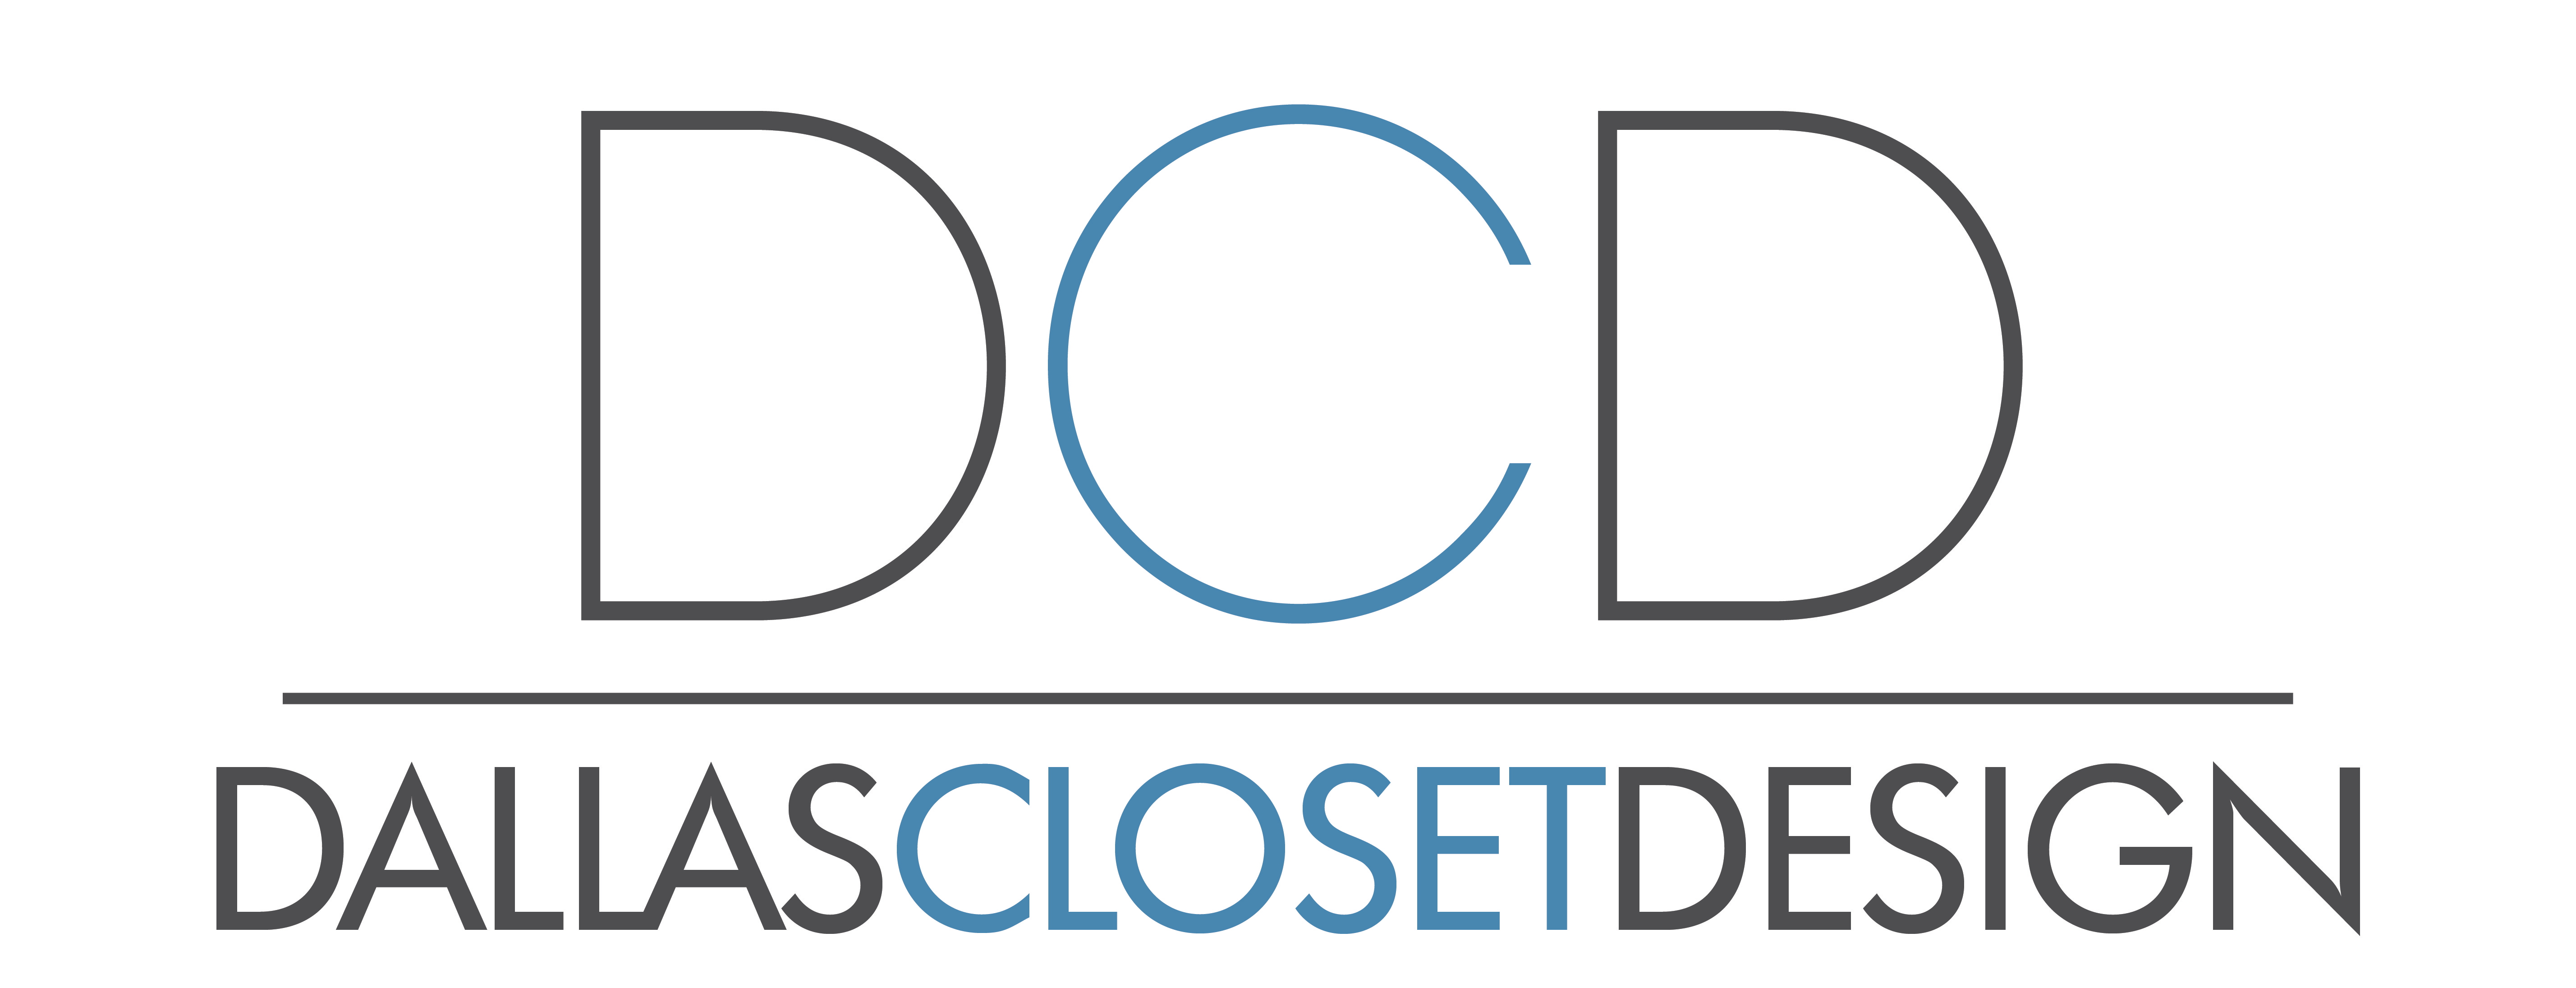 Dallas Closet Design, LLC Logo